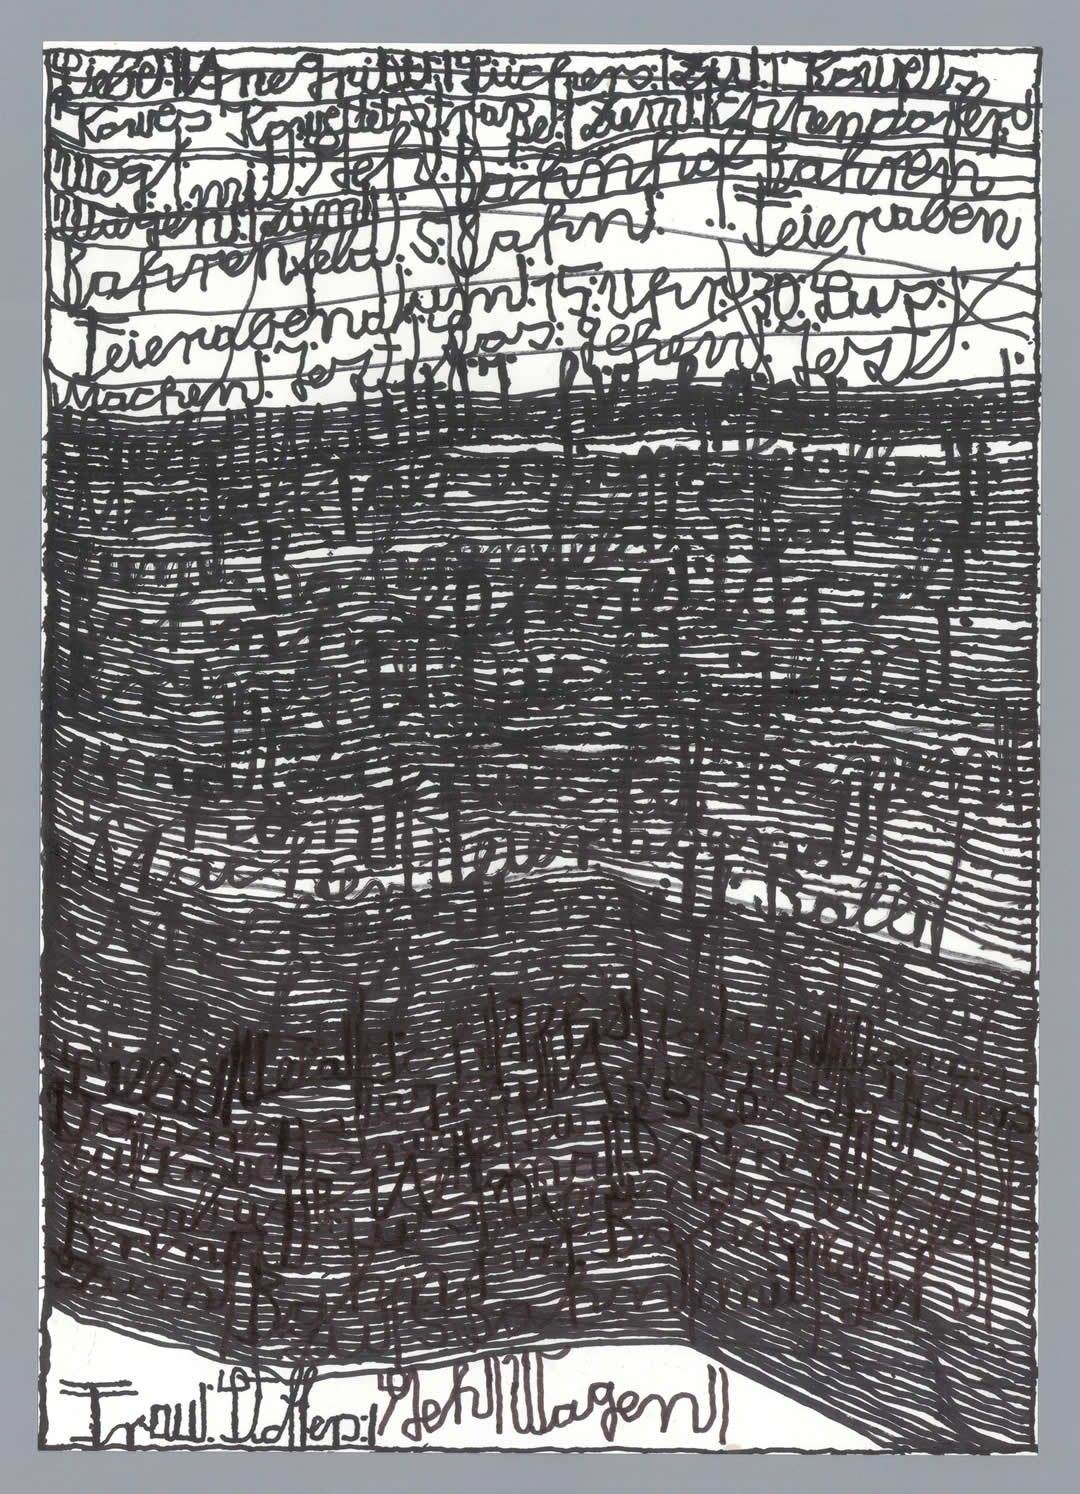 Harald Stoffers | Brief336 2014 | 41,5x29,5cm | viennacontemporary | Galerie3